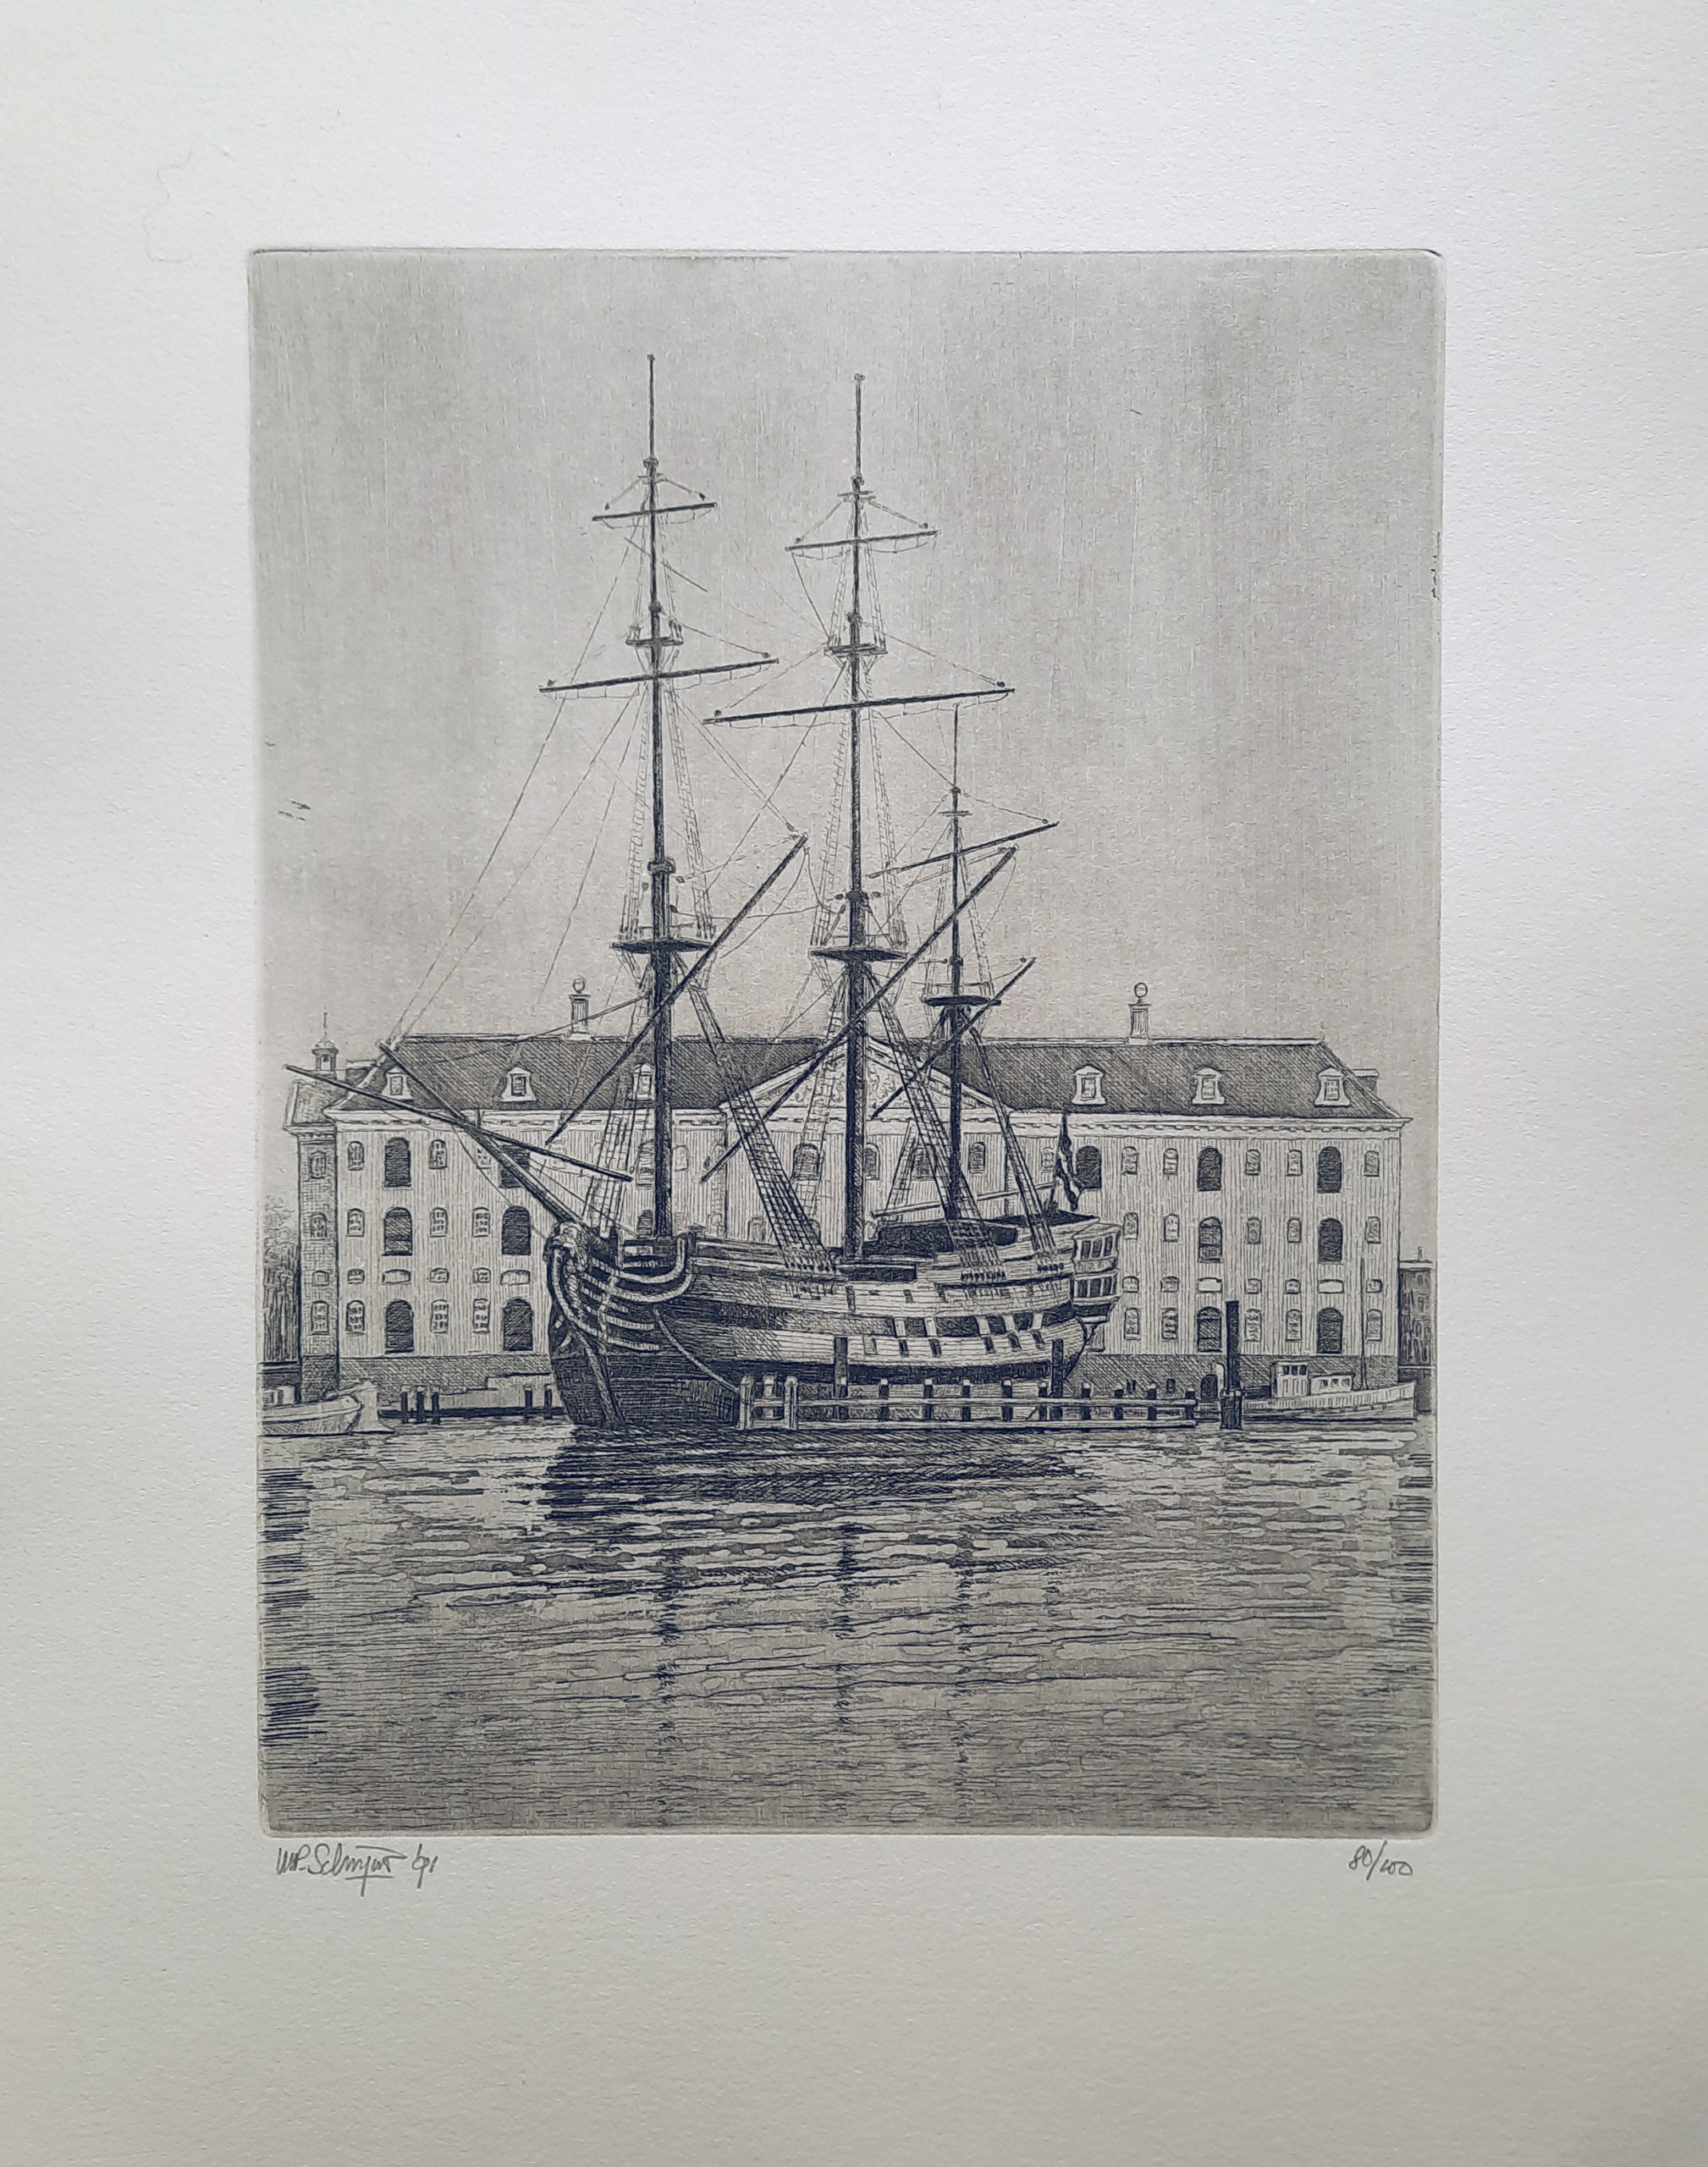 Featured image for “Scheepvaartmuseum VOC Amsterdam”